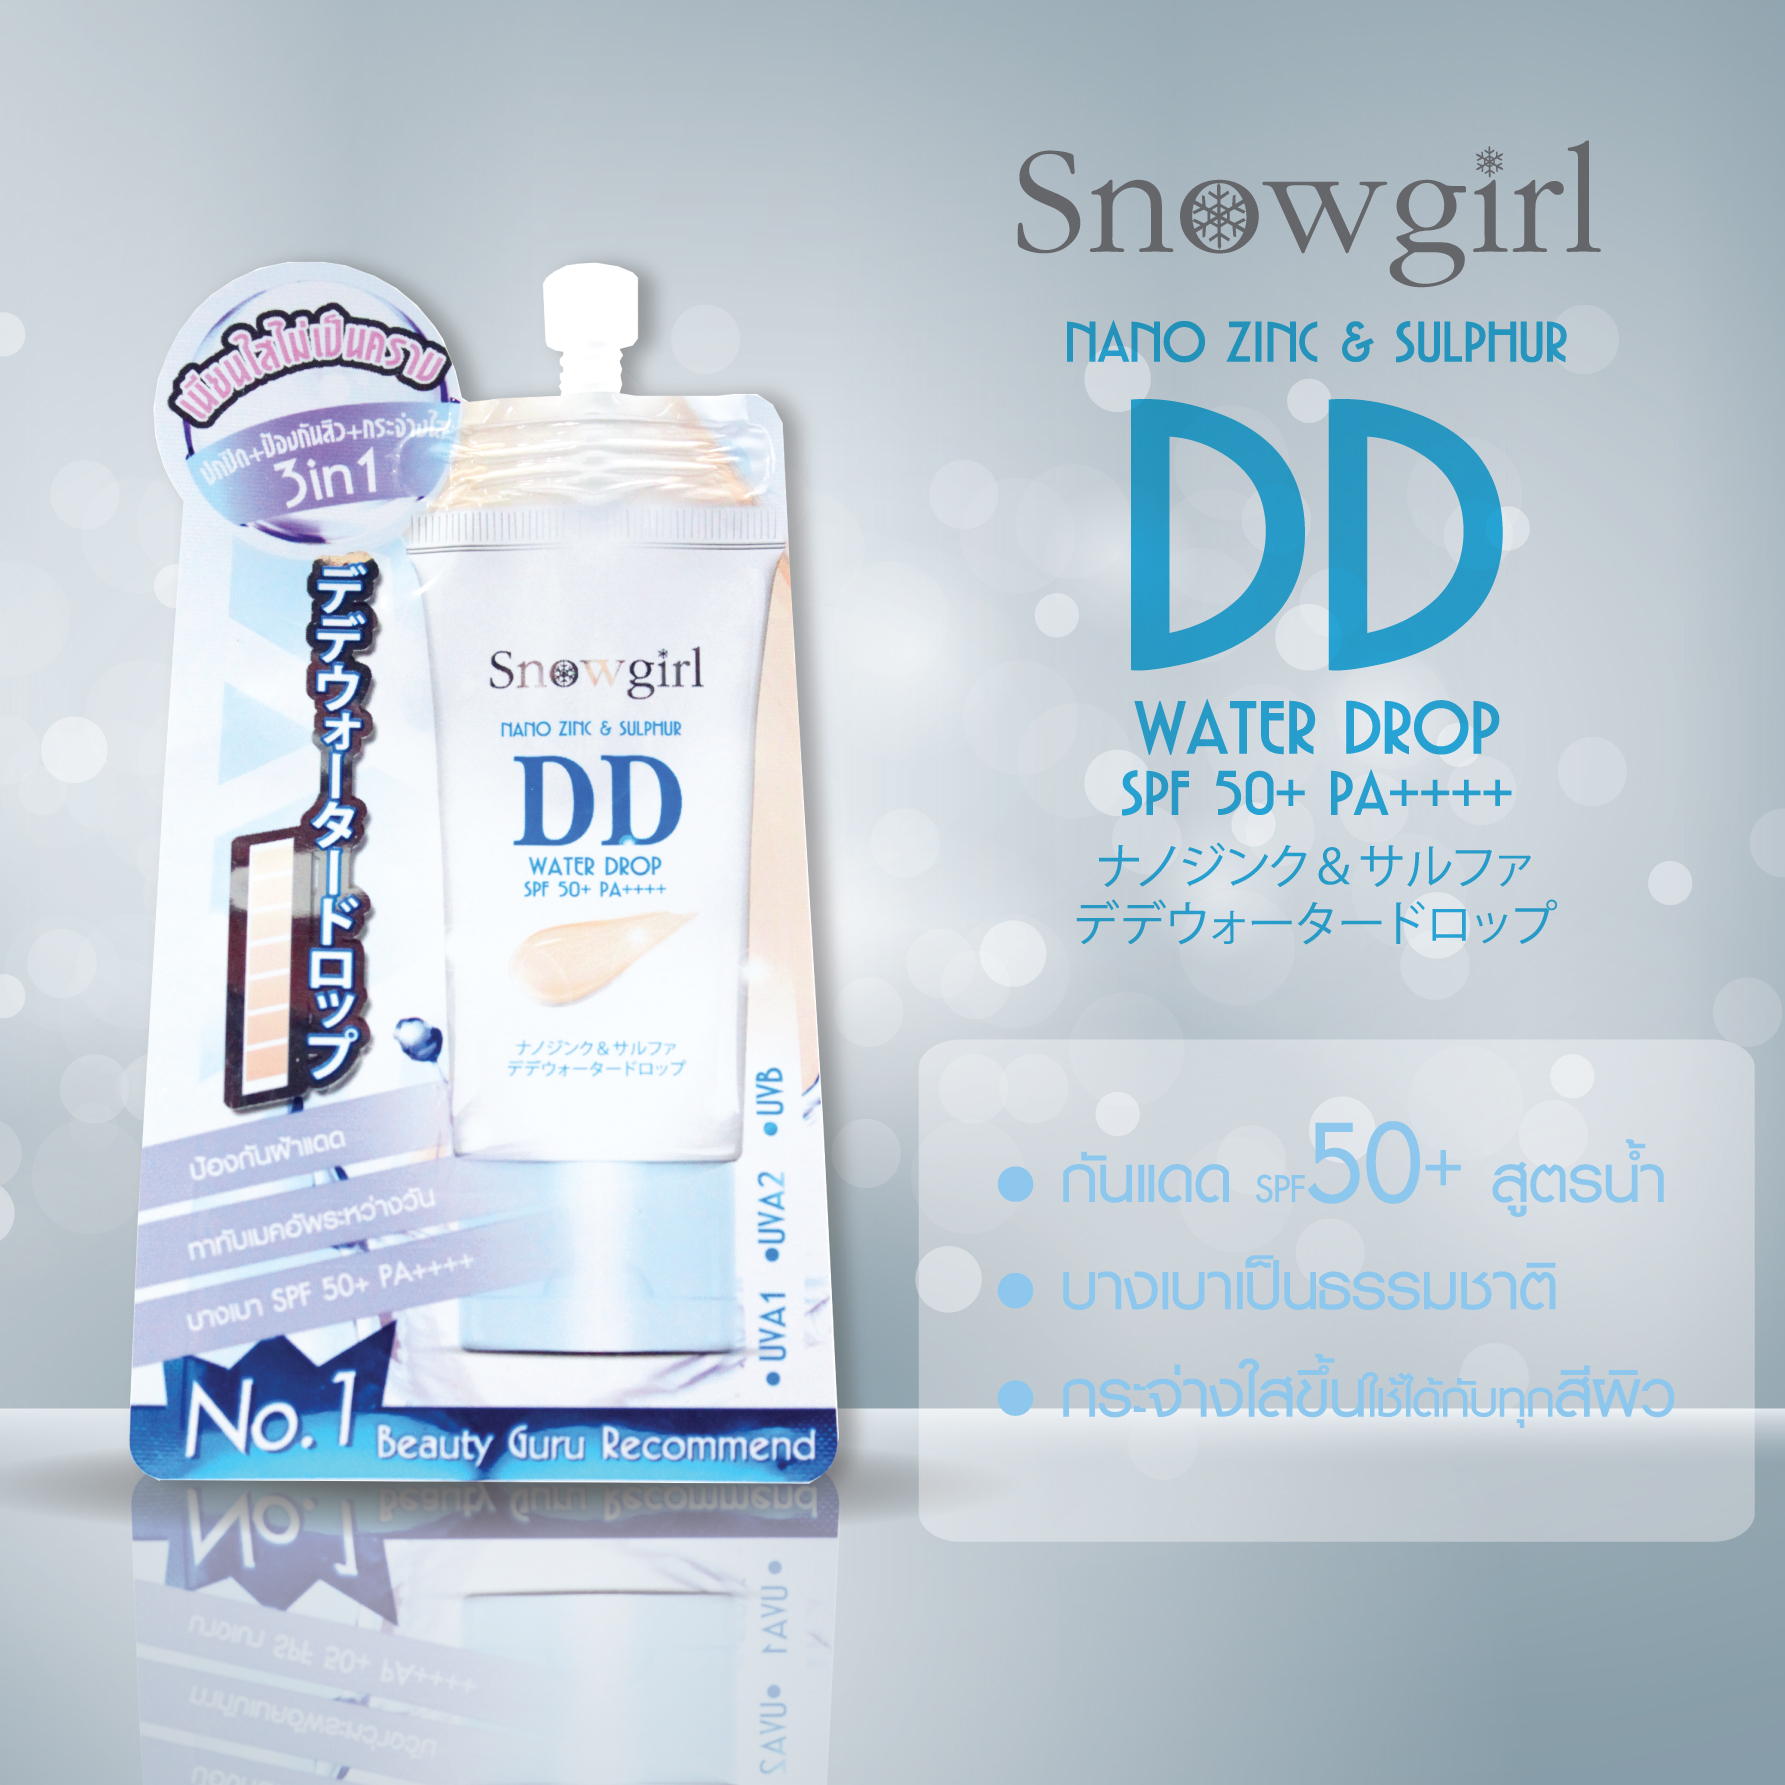 Snowgirl,Snowgirl DDครีม, Nano Zinc & Sulphur DD Water Drop SPF 50+ PA++++, DD ครีม,Nano Zinc & Sulphur DD Water Drop, รีวิวDD ครีม